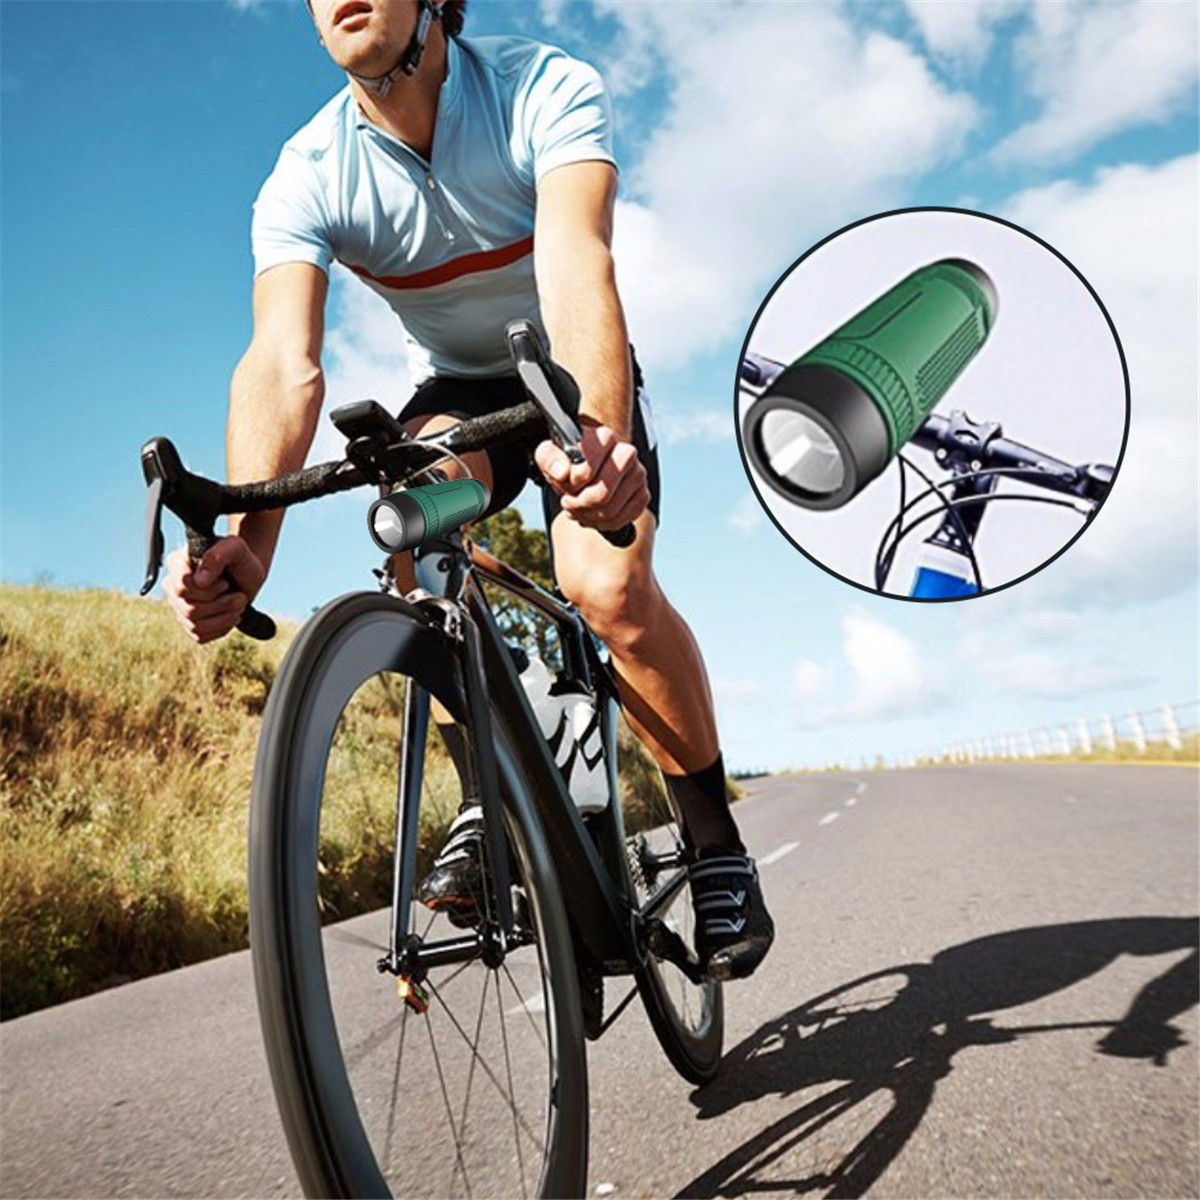 Elegiant-Outdoor-Waterproof-40-Bluetooth-Stereo-Car-Ride-With-Card-Charge-Treasure-Wireless-Speaker-1344695